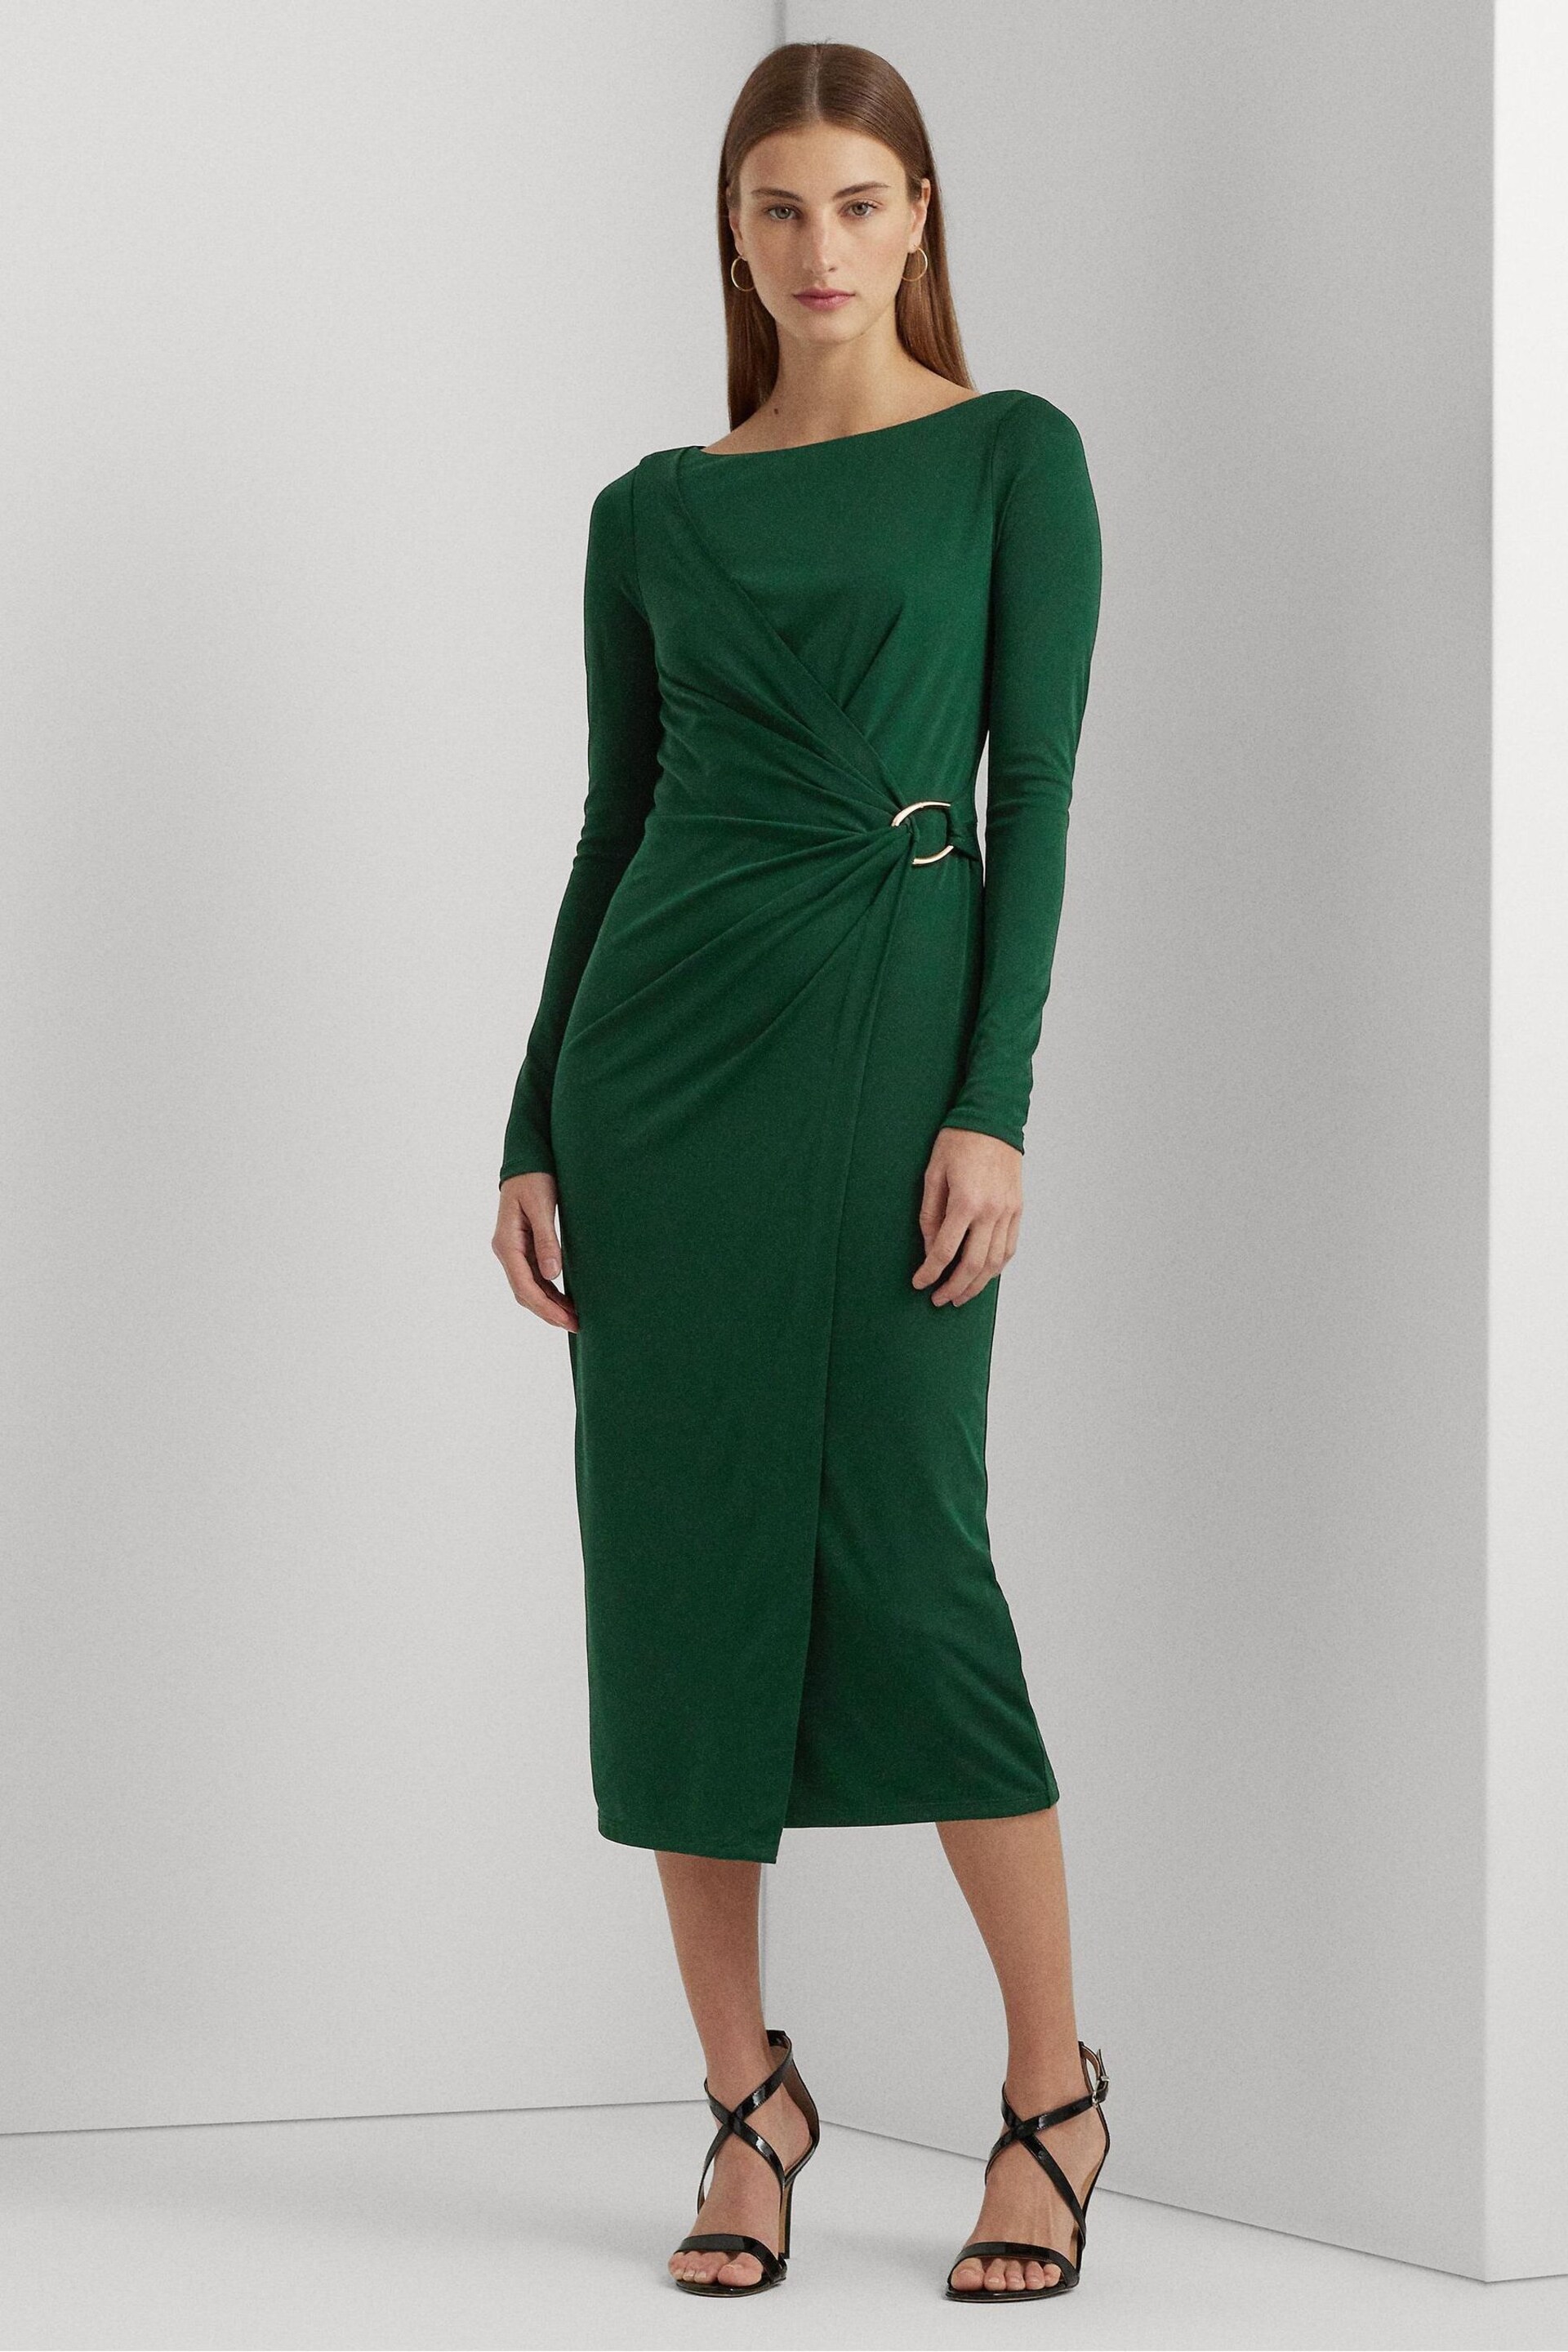 Lauren Ralph Lauren Green Jersey Long Sleeve Cocktail Dress - Image 1 of 8